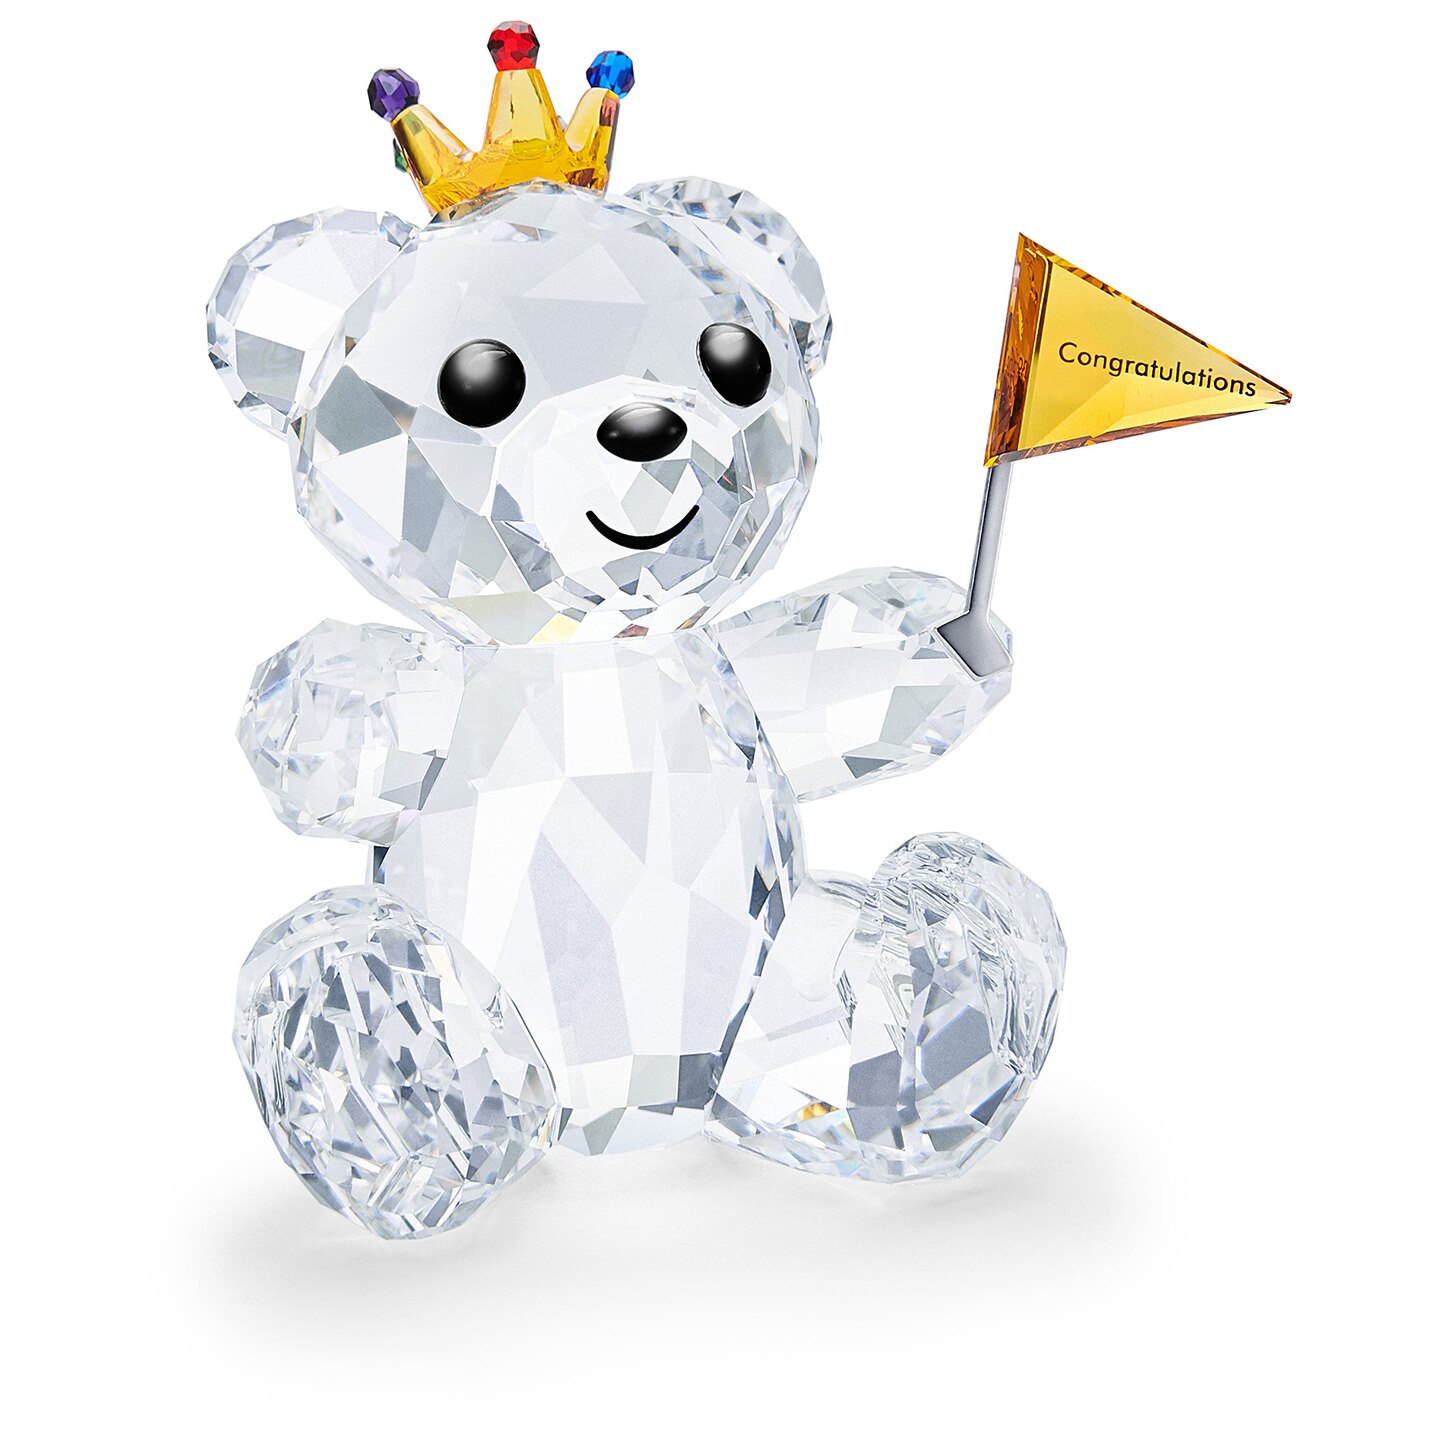 Swarovski Kris Bear - Congratulations Figurine